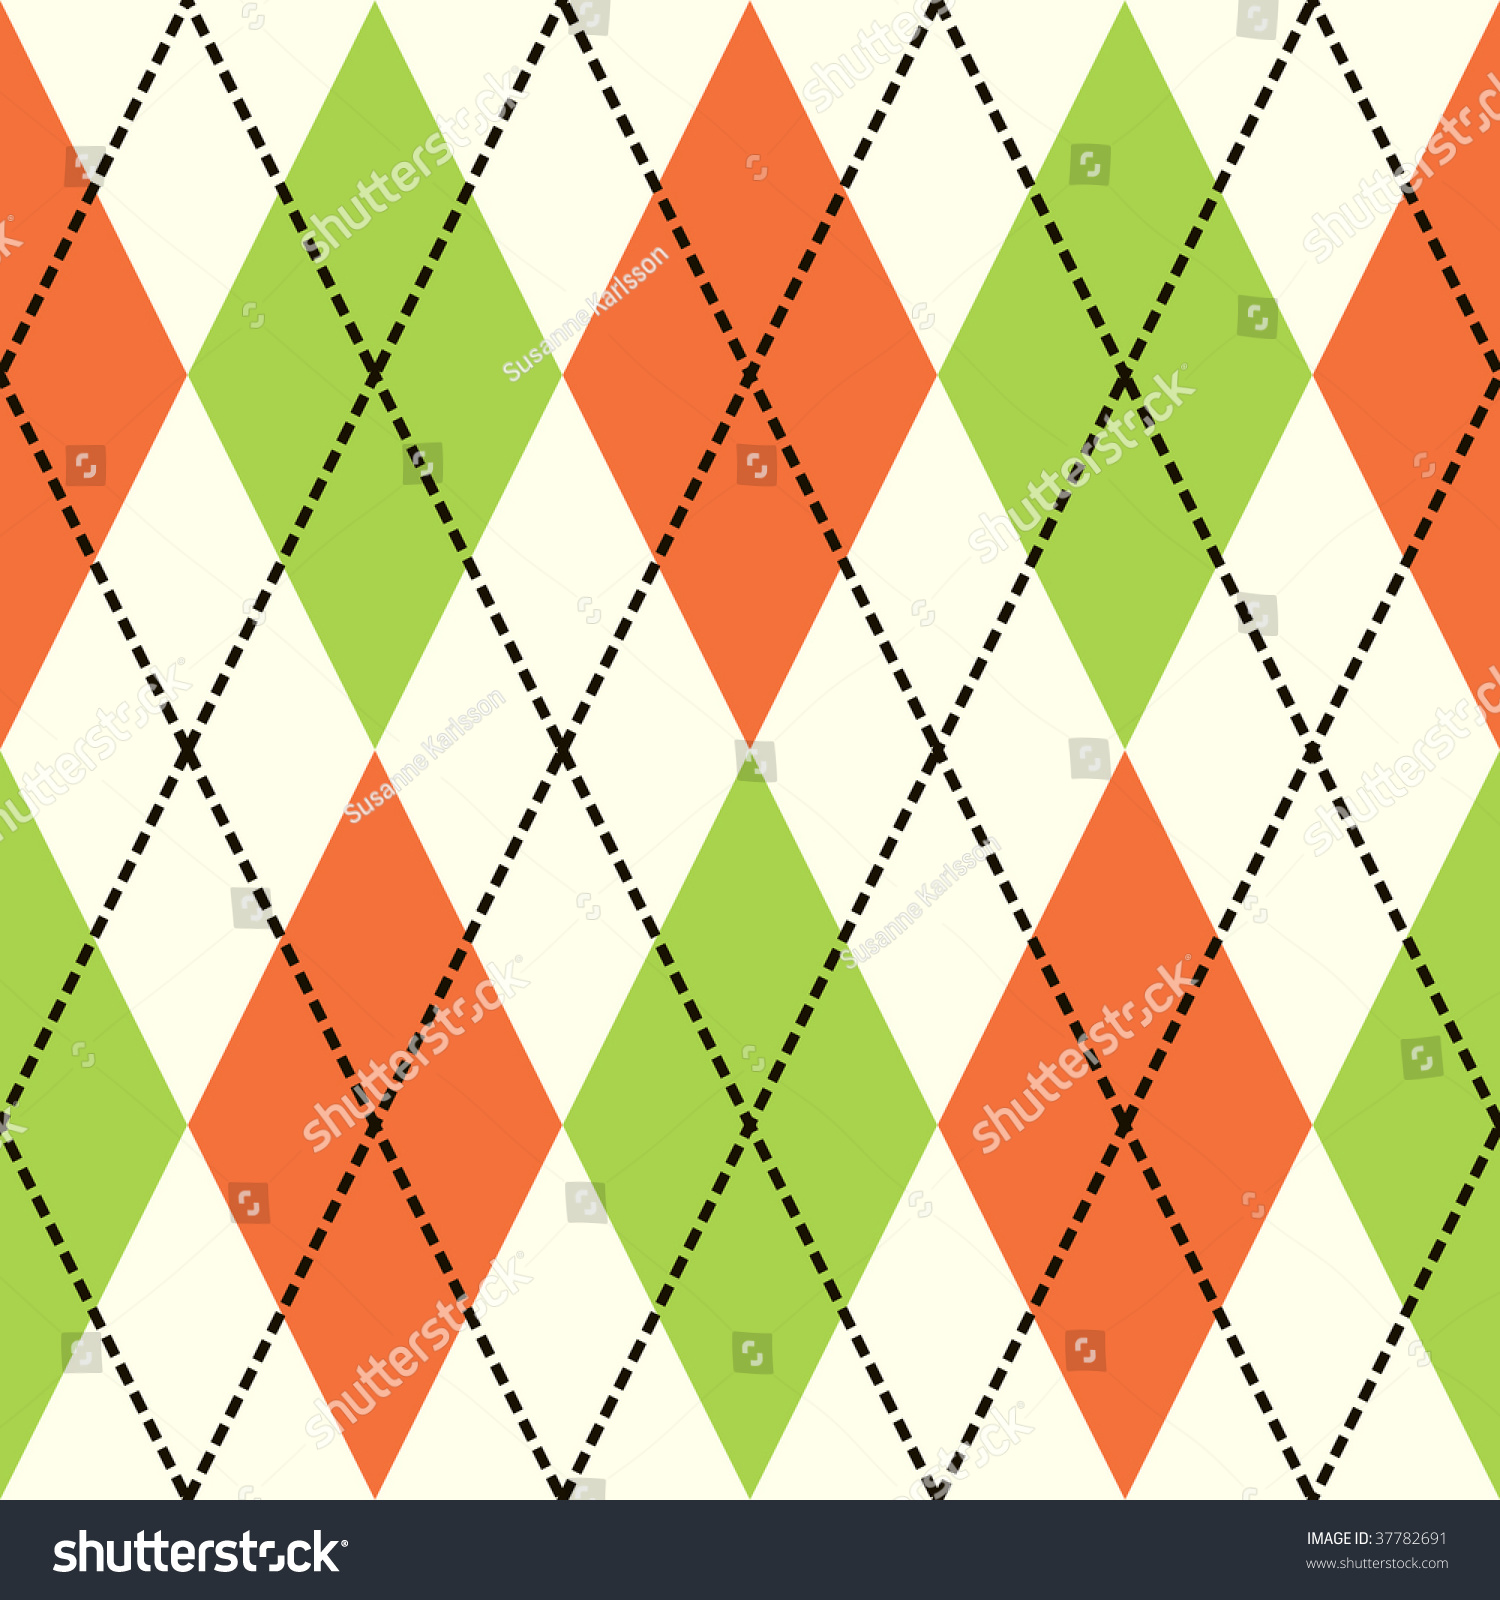 Orange and Green seamless background